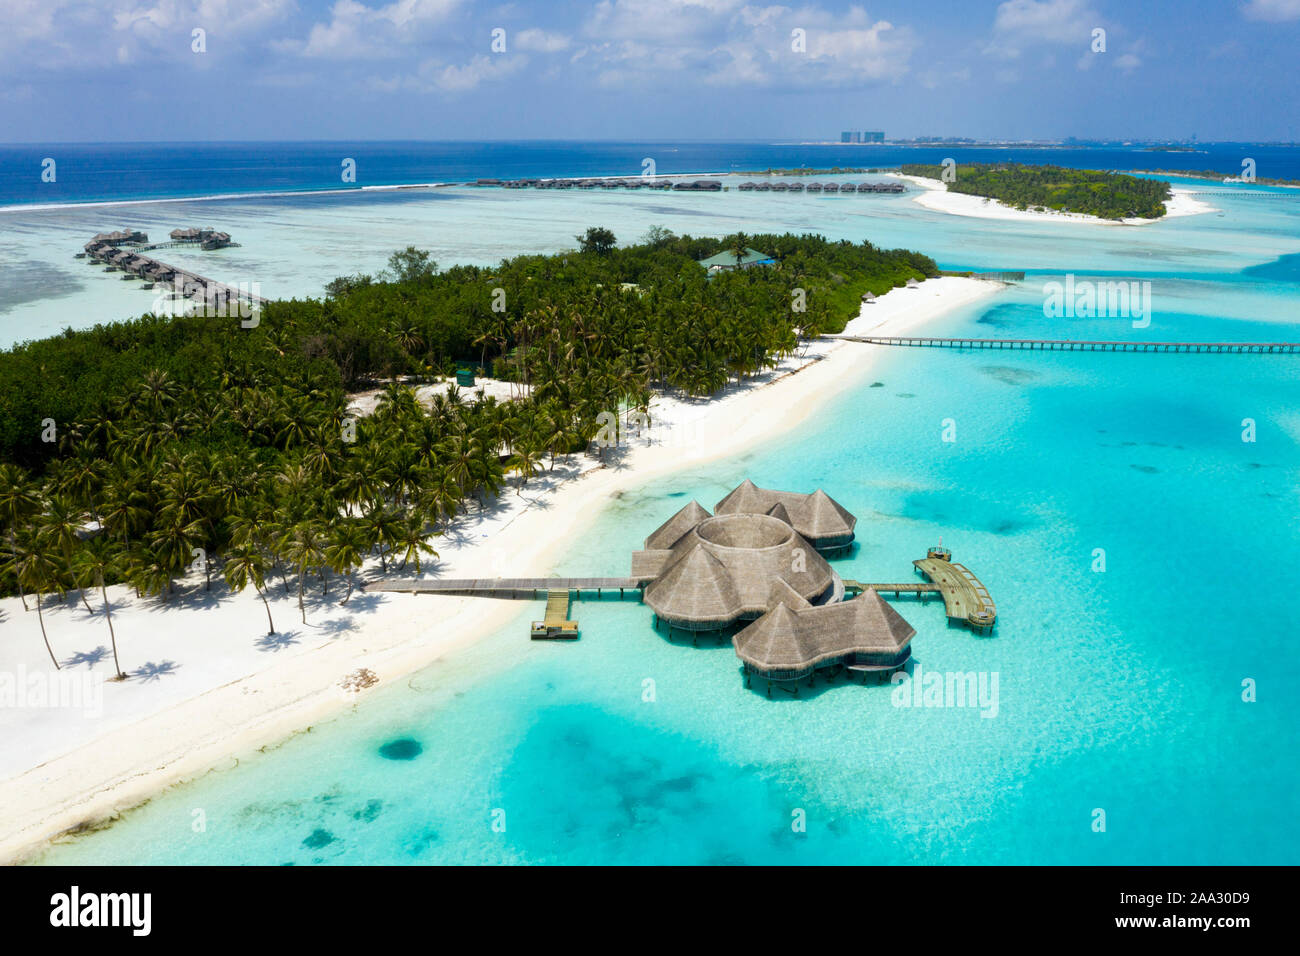 Aerial View of Vacation Island Lankanfushi, North Male Atoll, Indian Ocean, Maldives - Stock Image